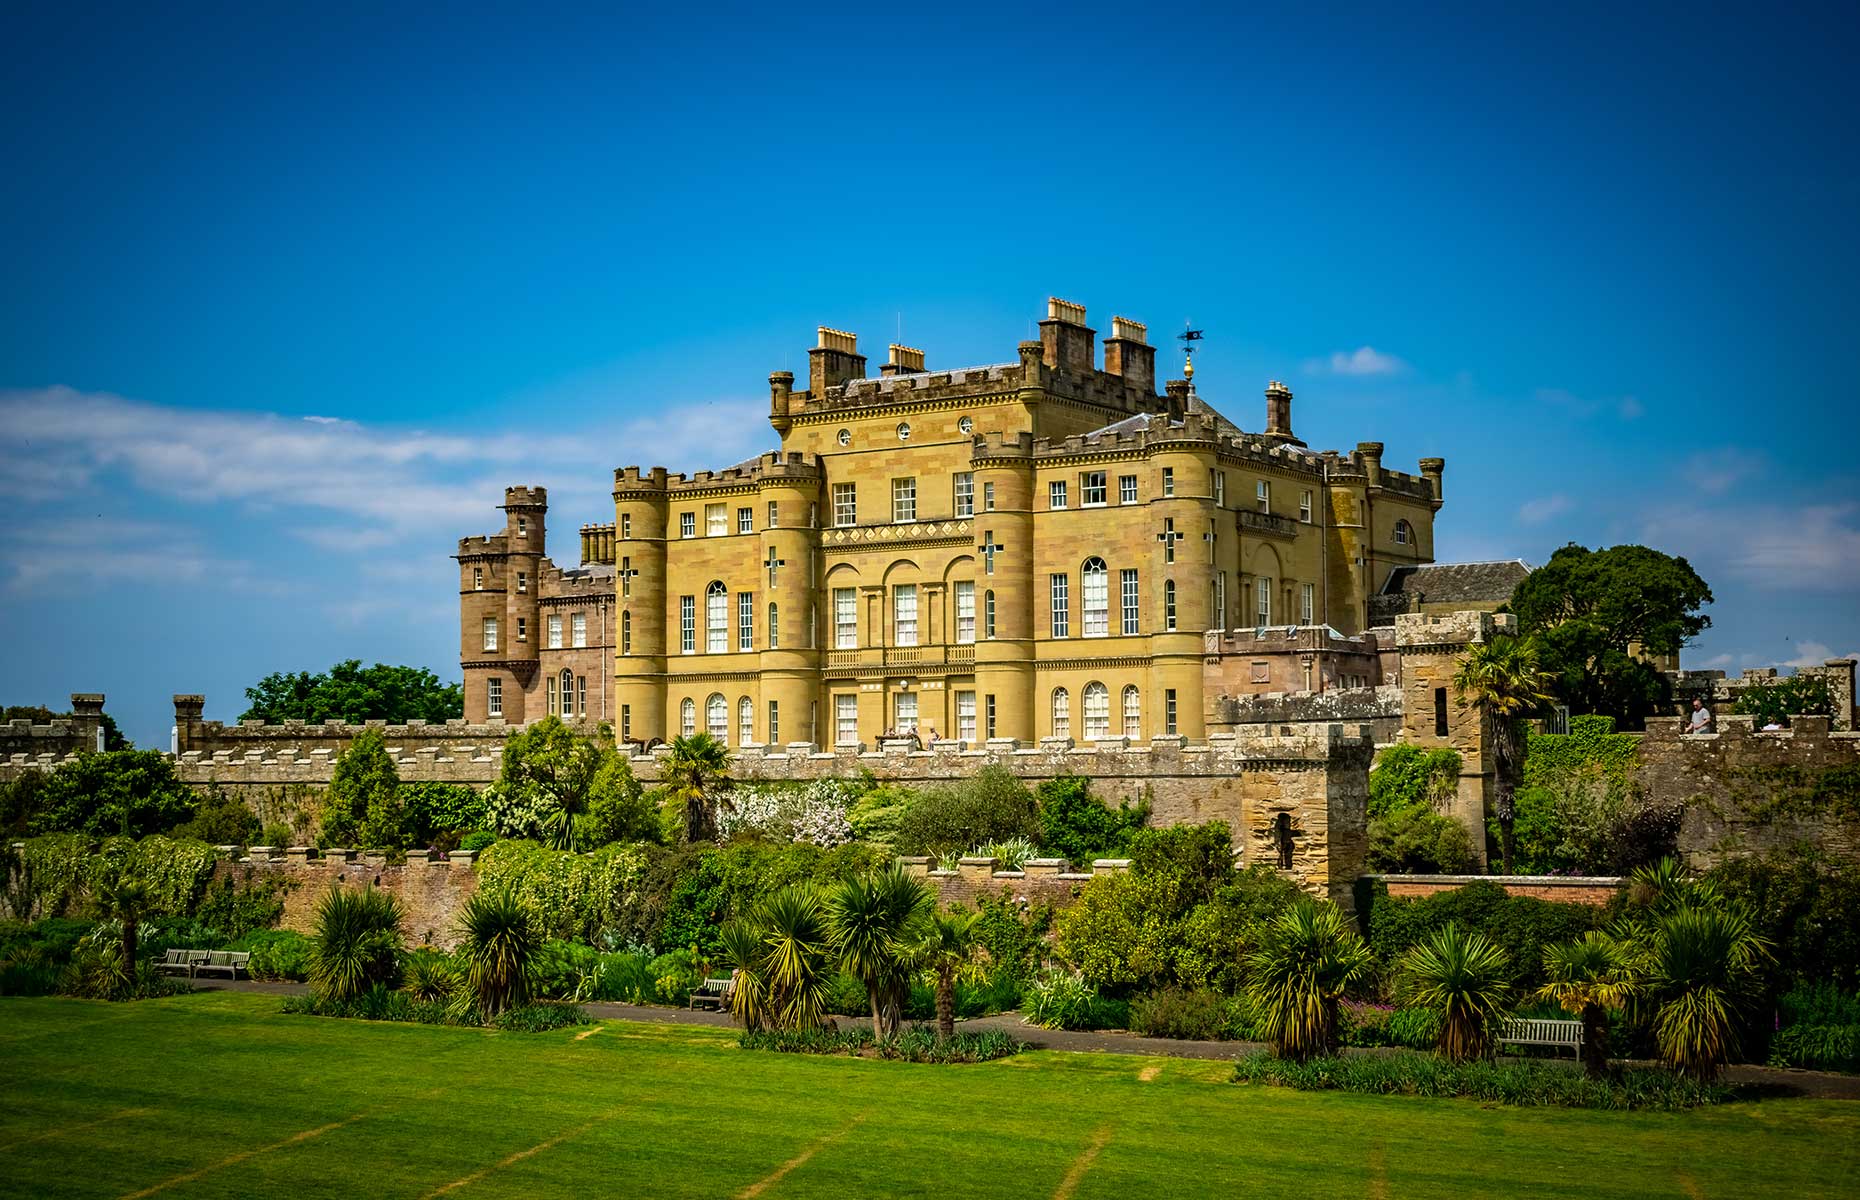 Culzean Castle estate, Scotland (Image: Scotdrone360/Shutterstock)